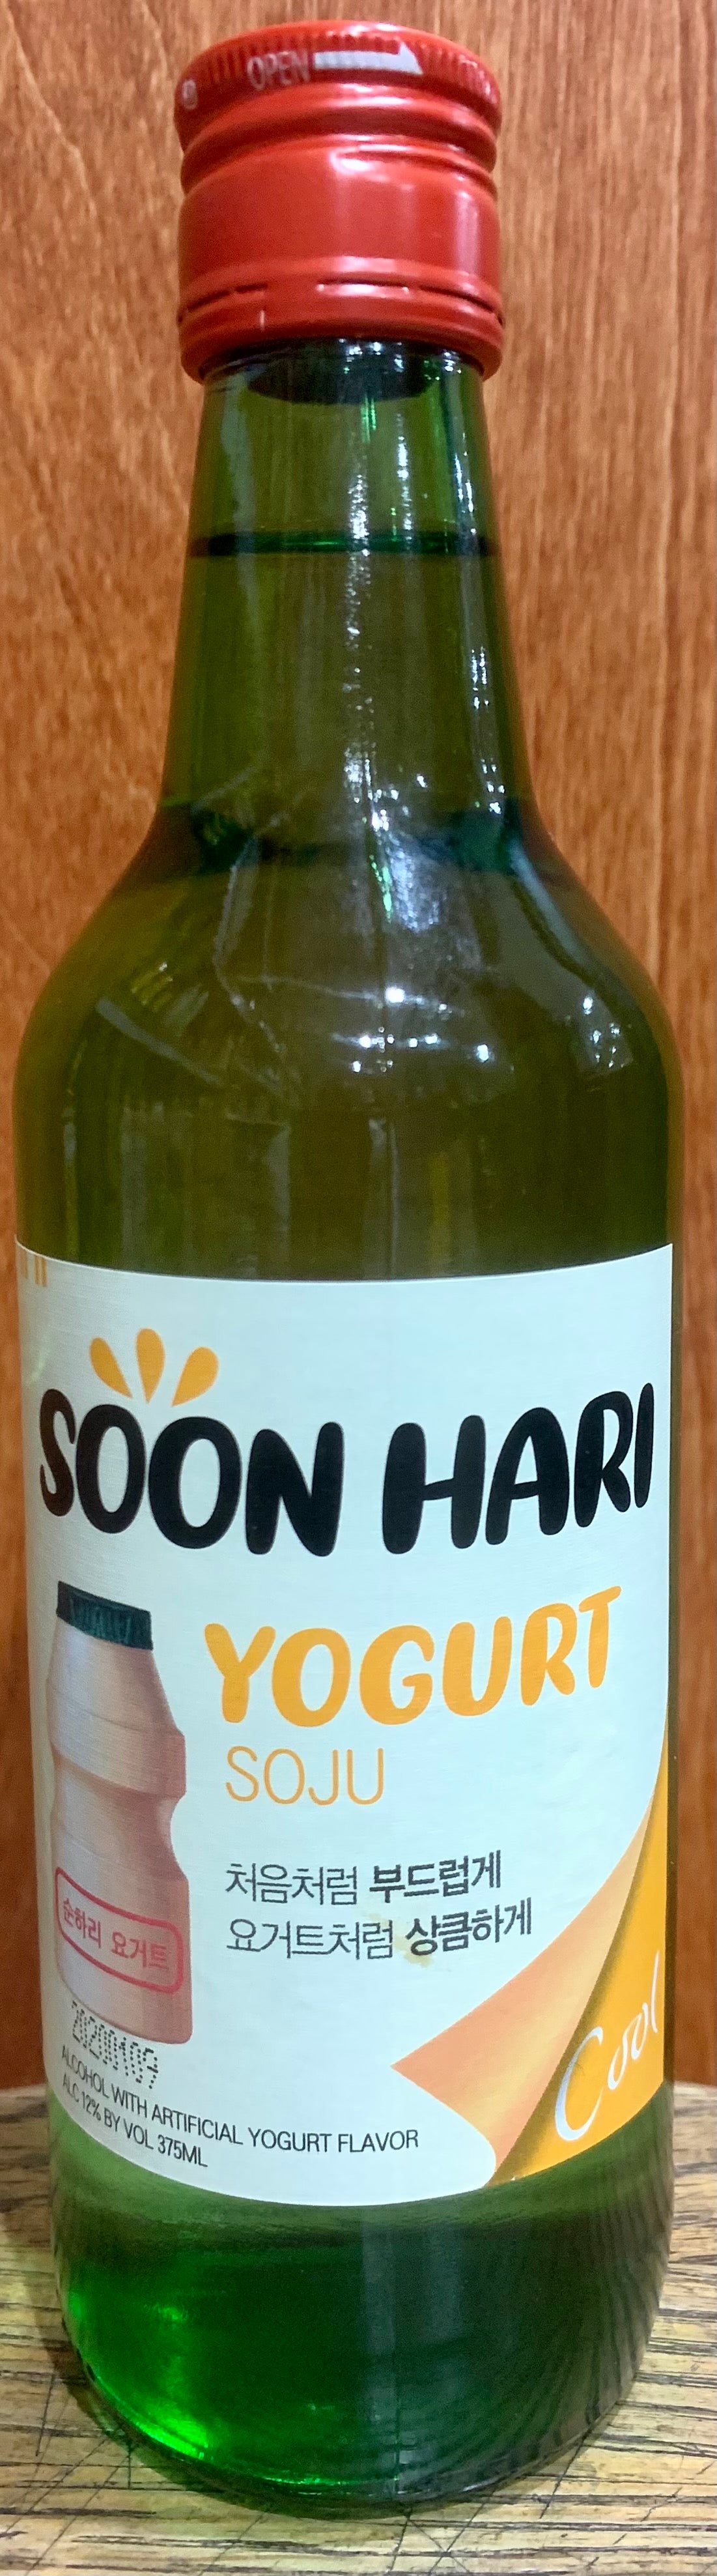 SOONHARI YOGURT SOJU - Bk Wine Depot Corp